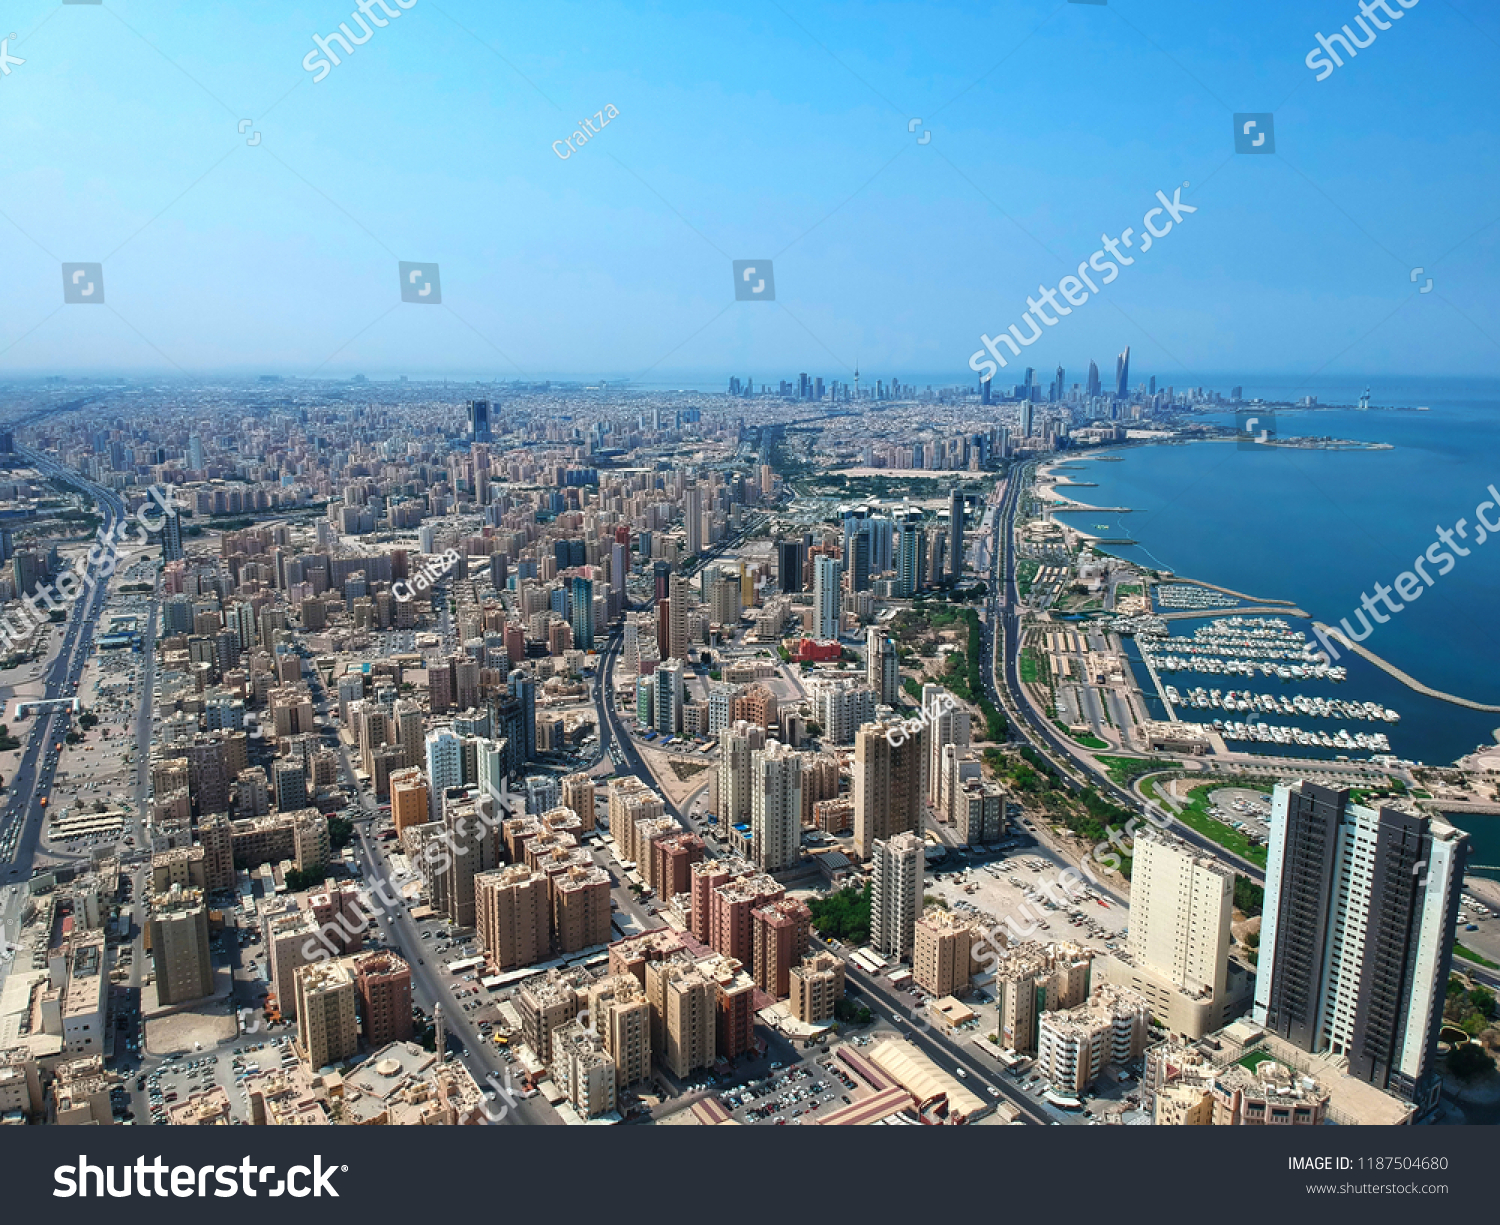 Aerial View Of The Modern Urban Landscape Of Coastal Salmiya City Kuwait #1187504680